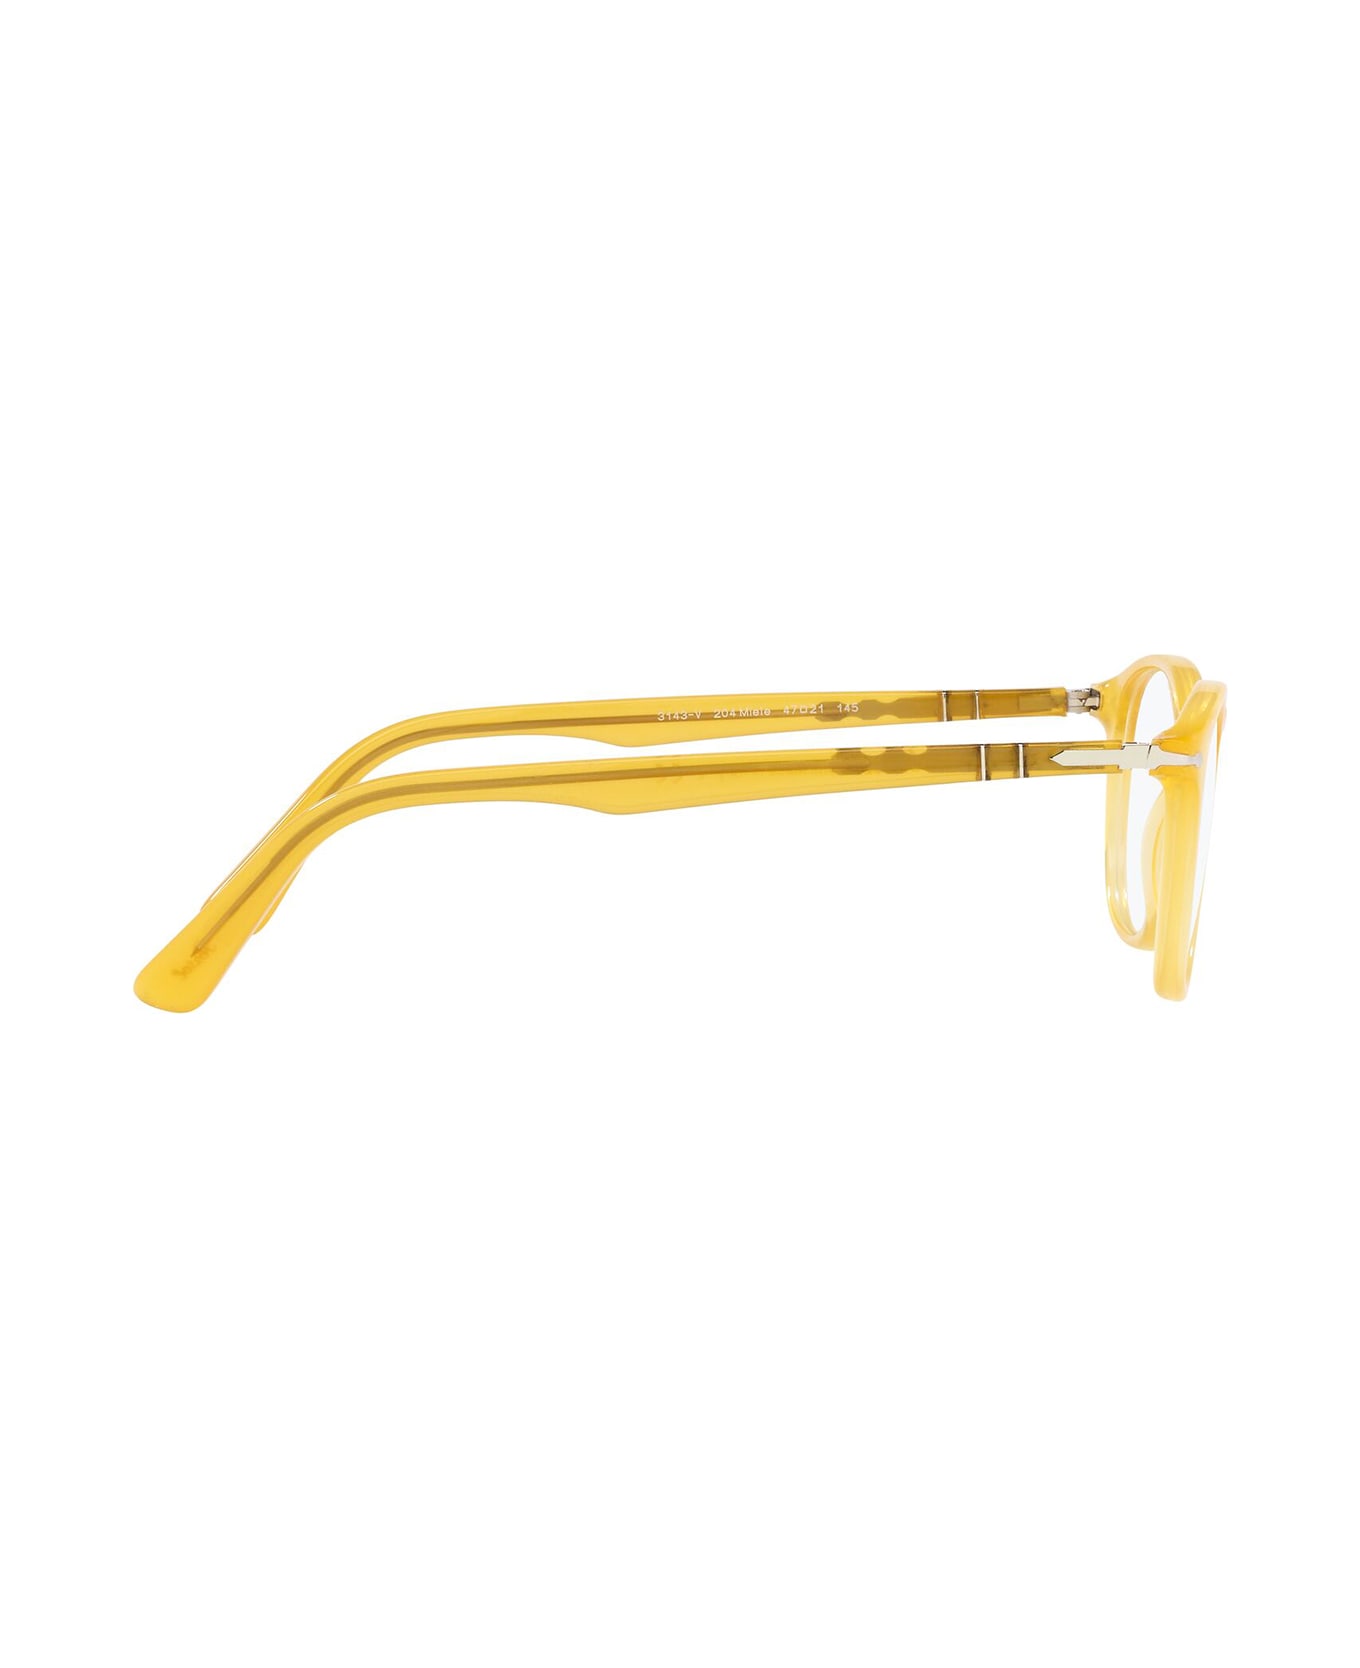 Persol Po3143v Miele Glasses - Miele